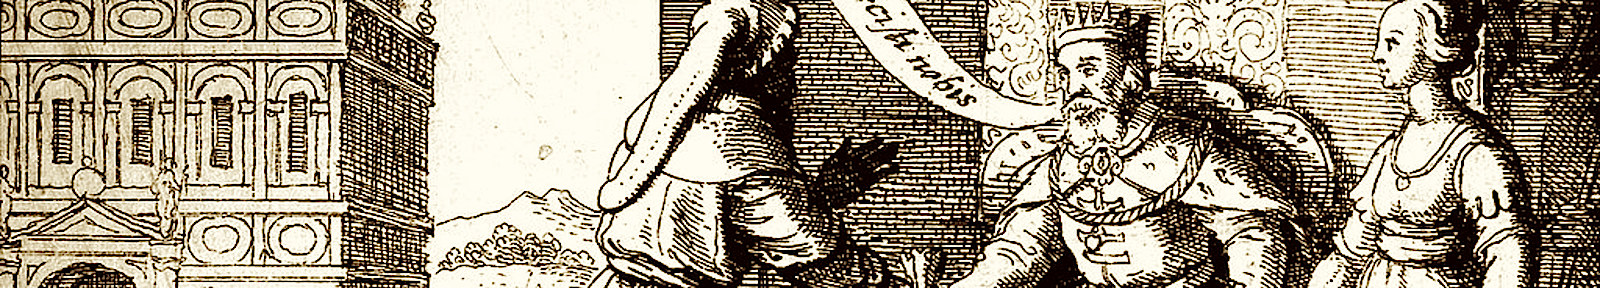 Авимелех упрекает Авраама. Офорт Вацлава Холлара, XVII век